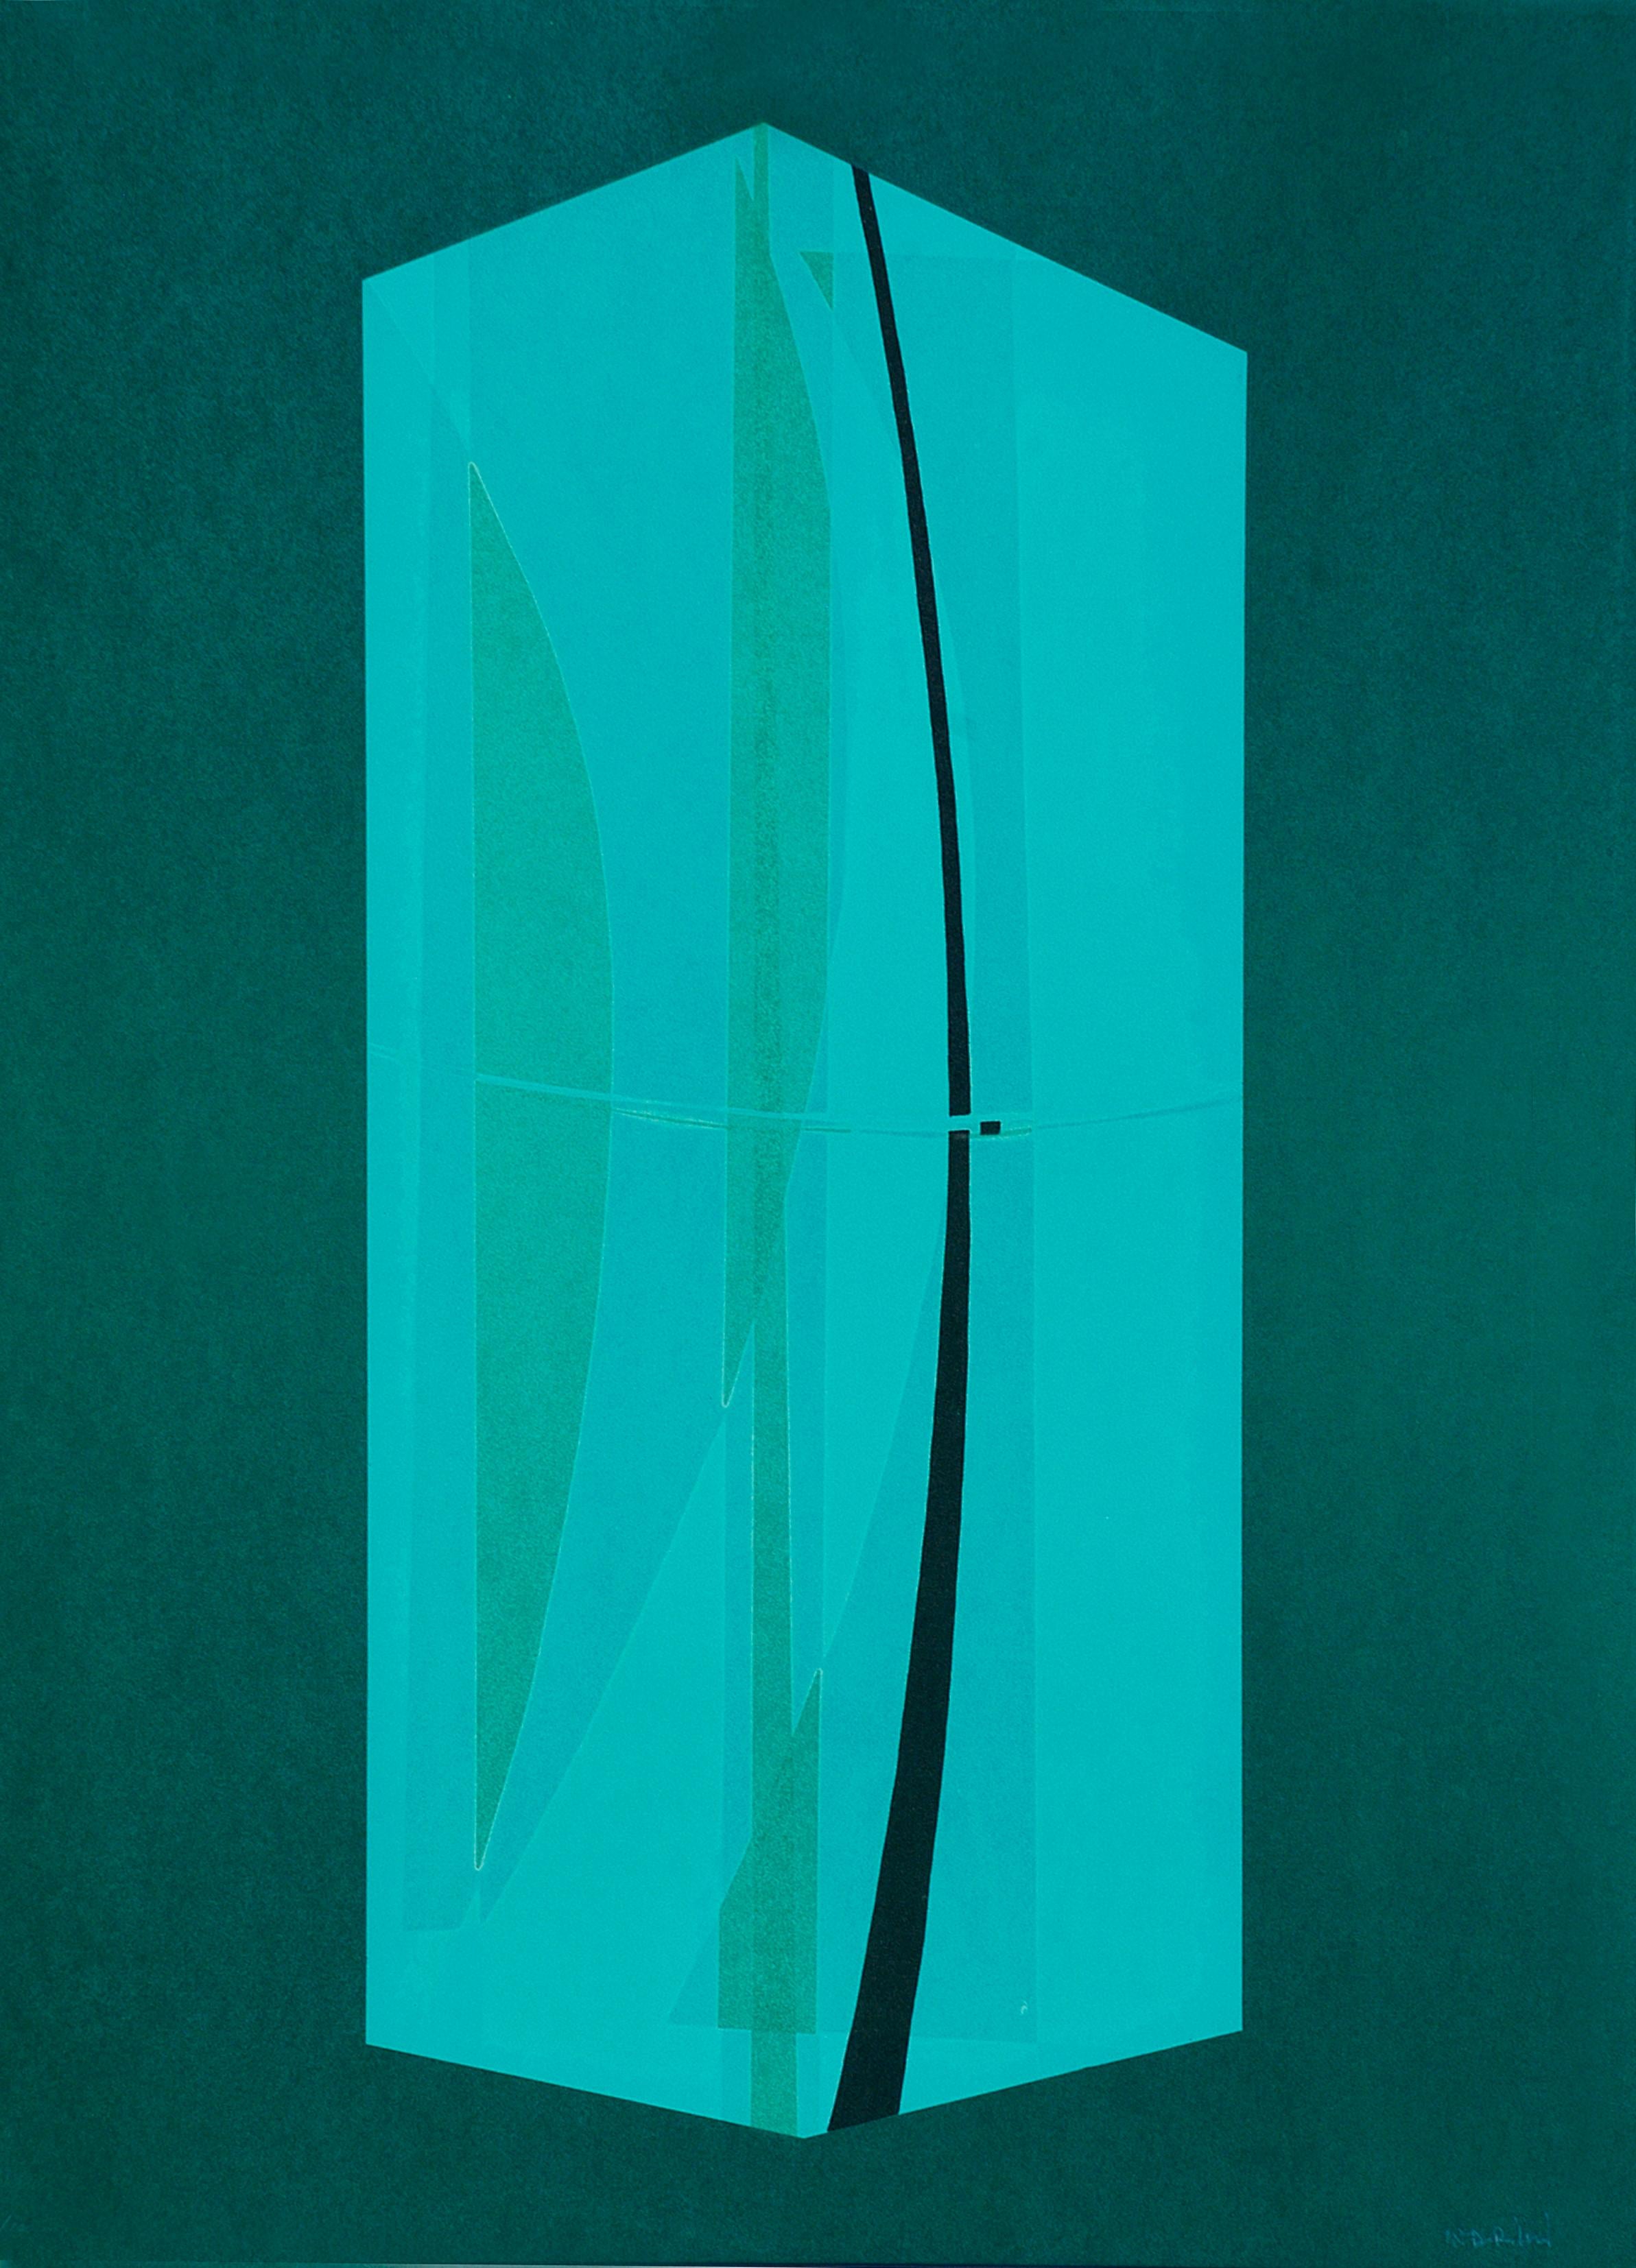 Solid Green - Original Lithograph by Lorenzo Indrimi - 1970 ca.